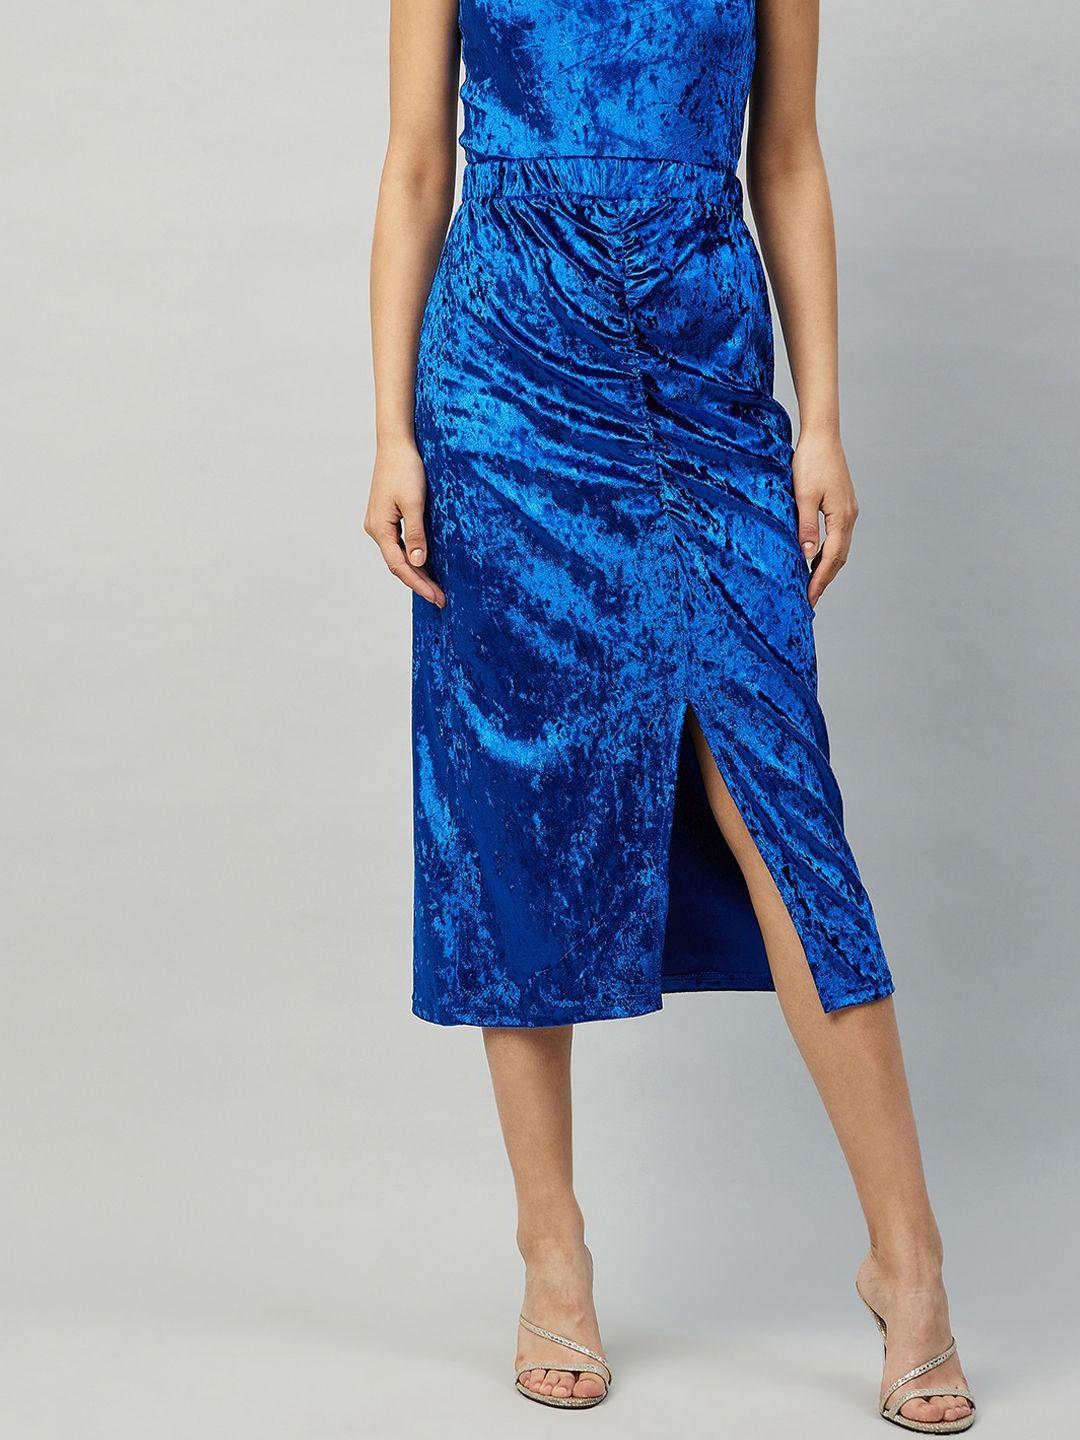 carlton-london-women-blue-solid-midi-pencil-skirt